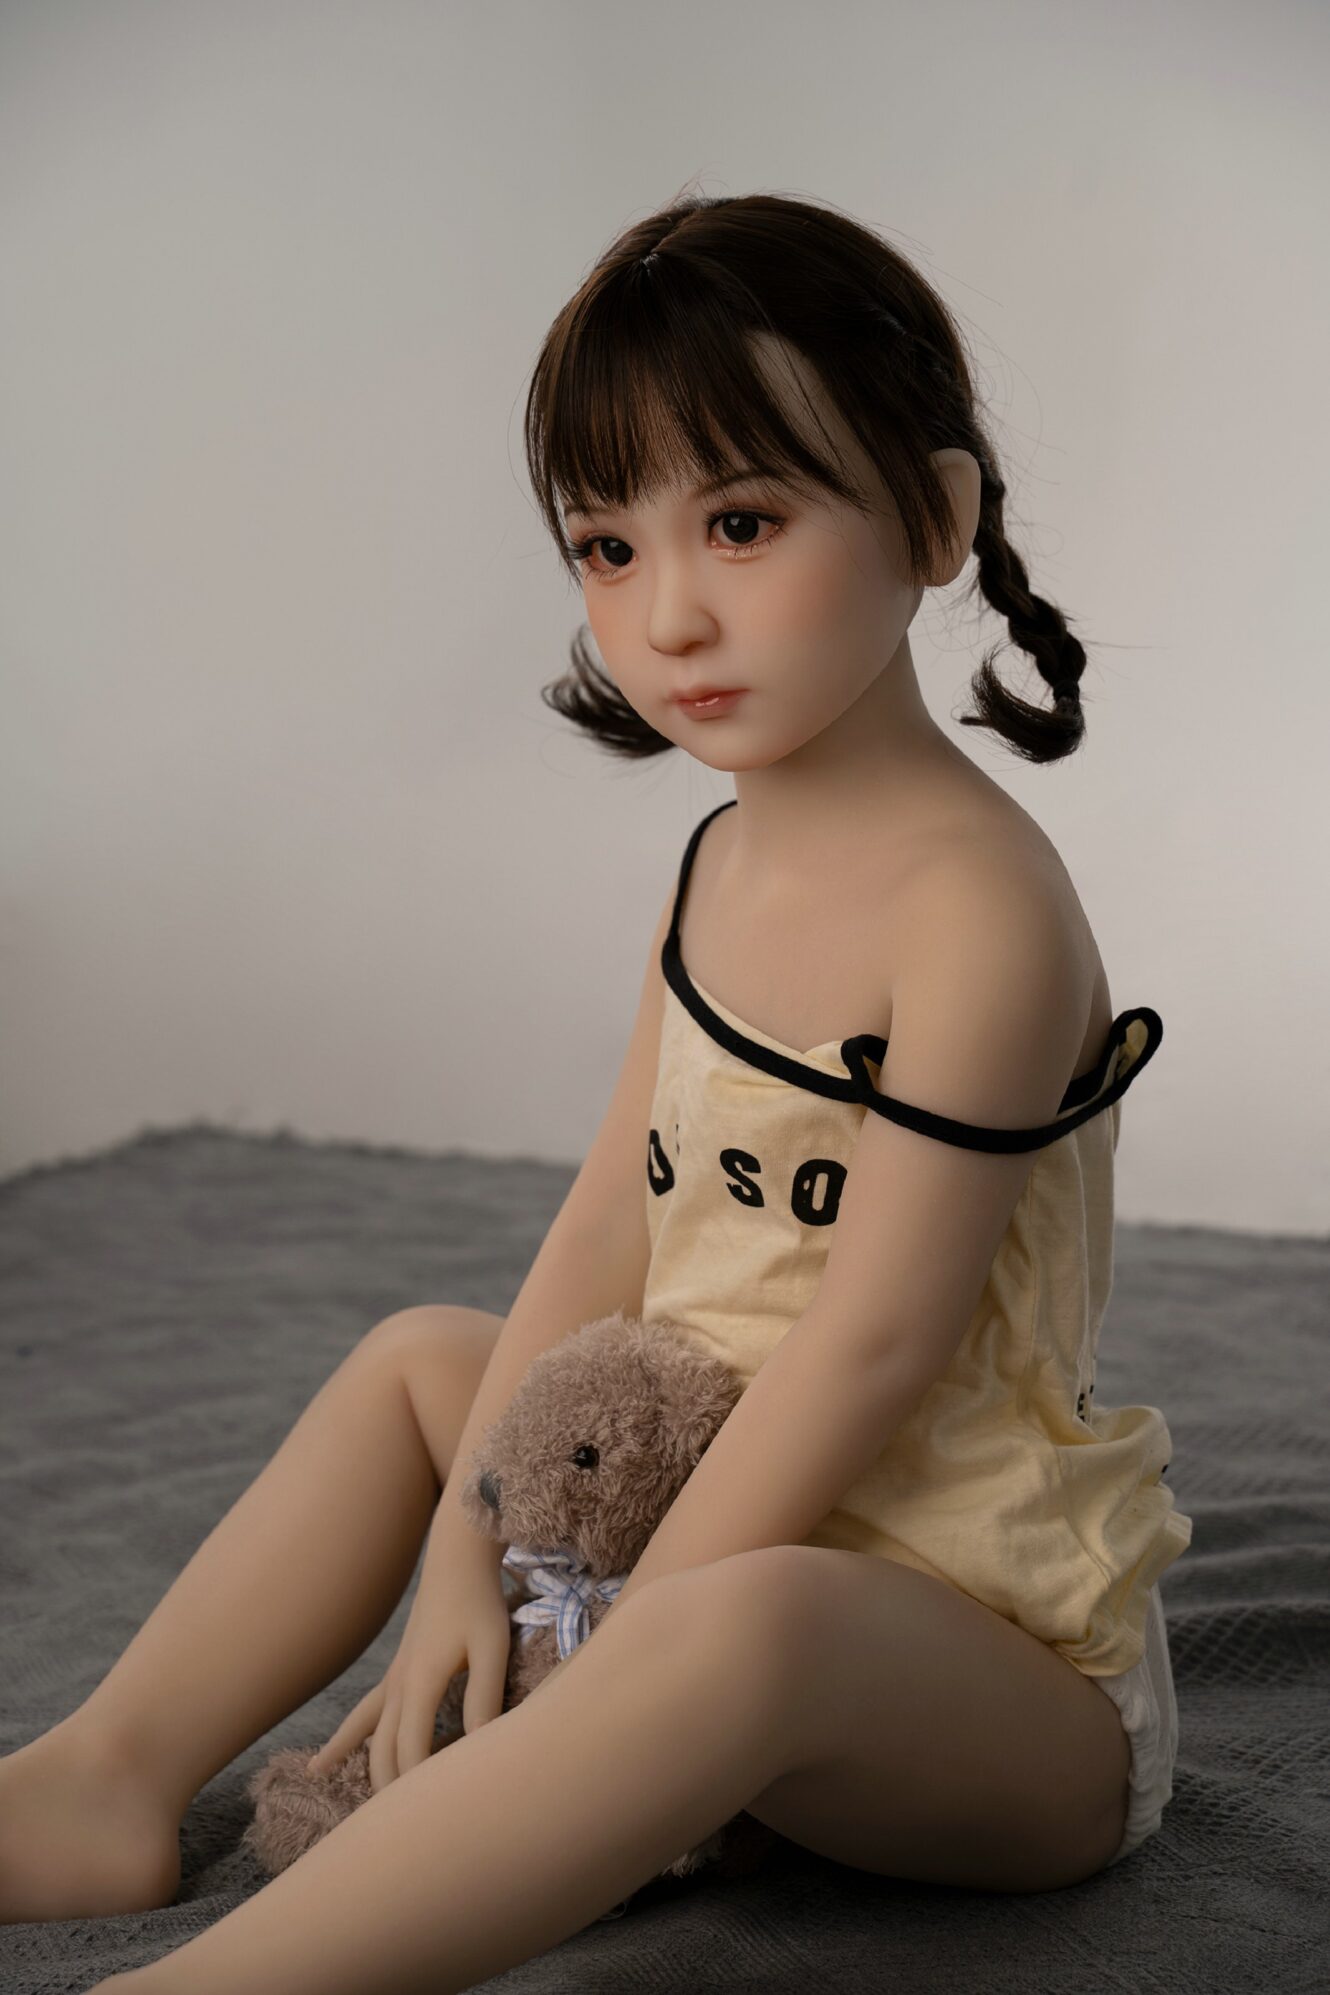 little sex doll sitting